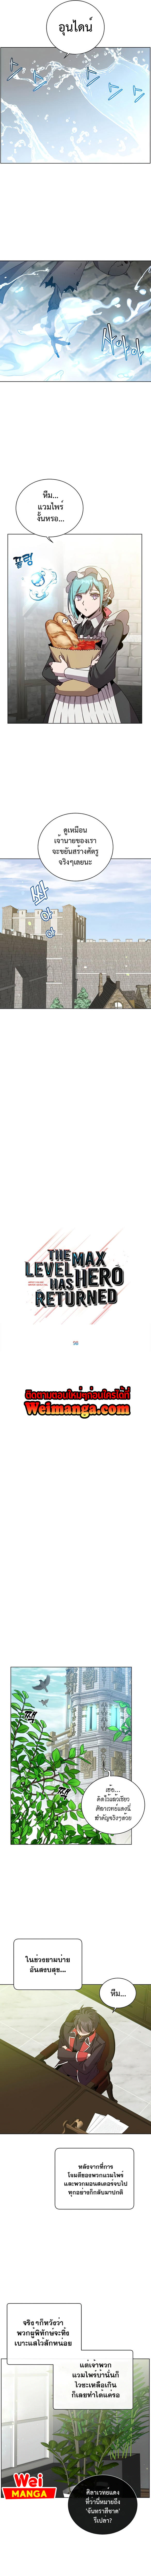 The Max Level Hero has Returned99 (4)